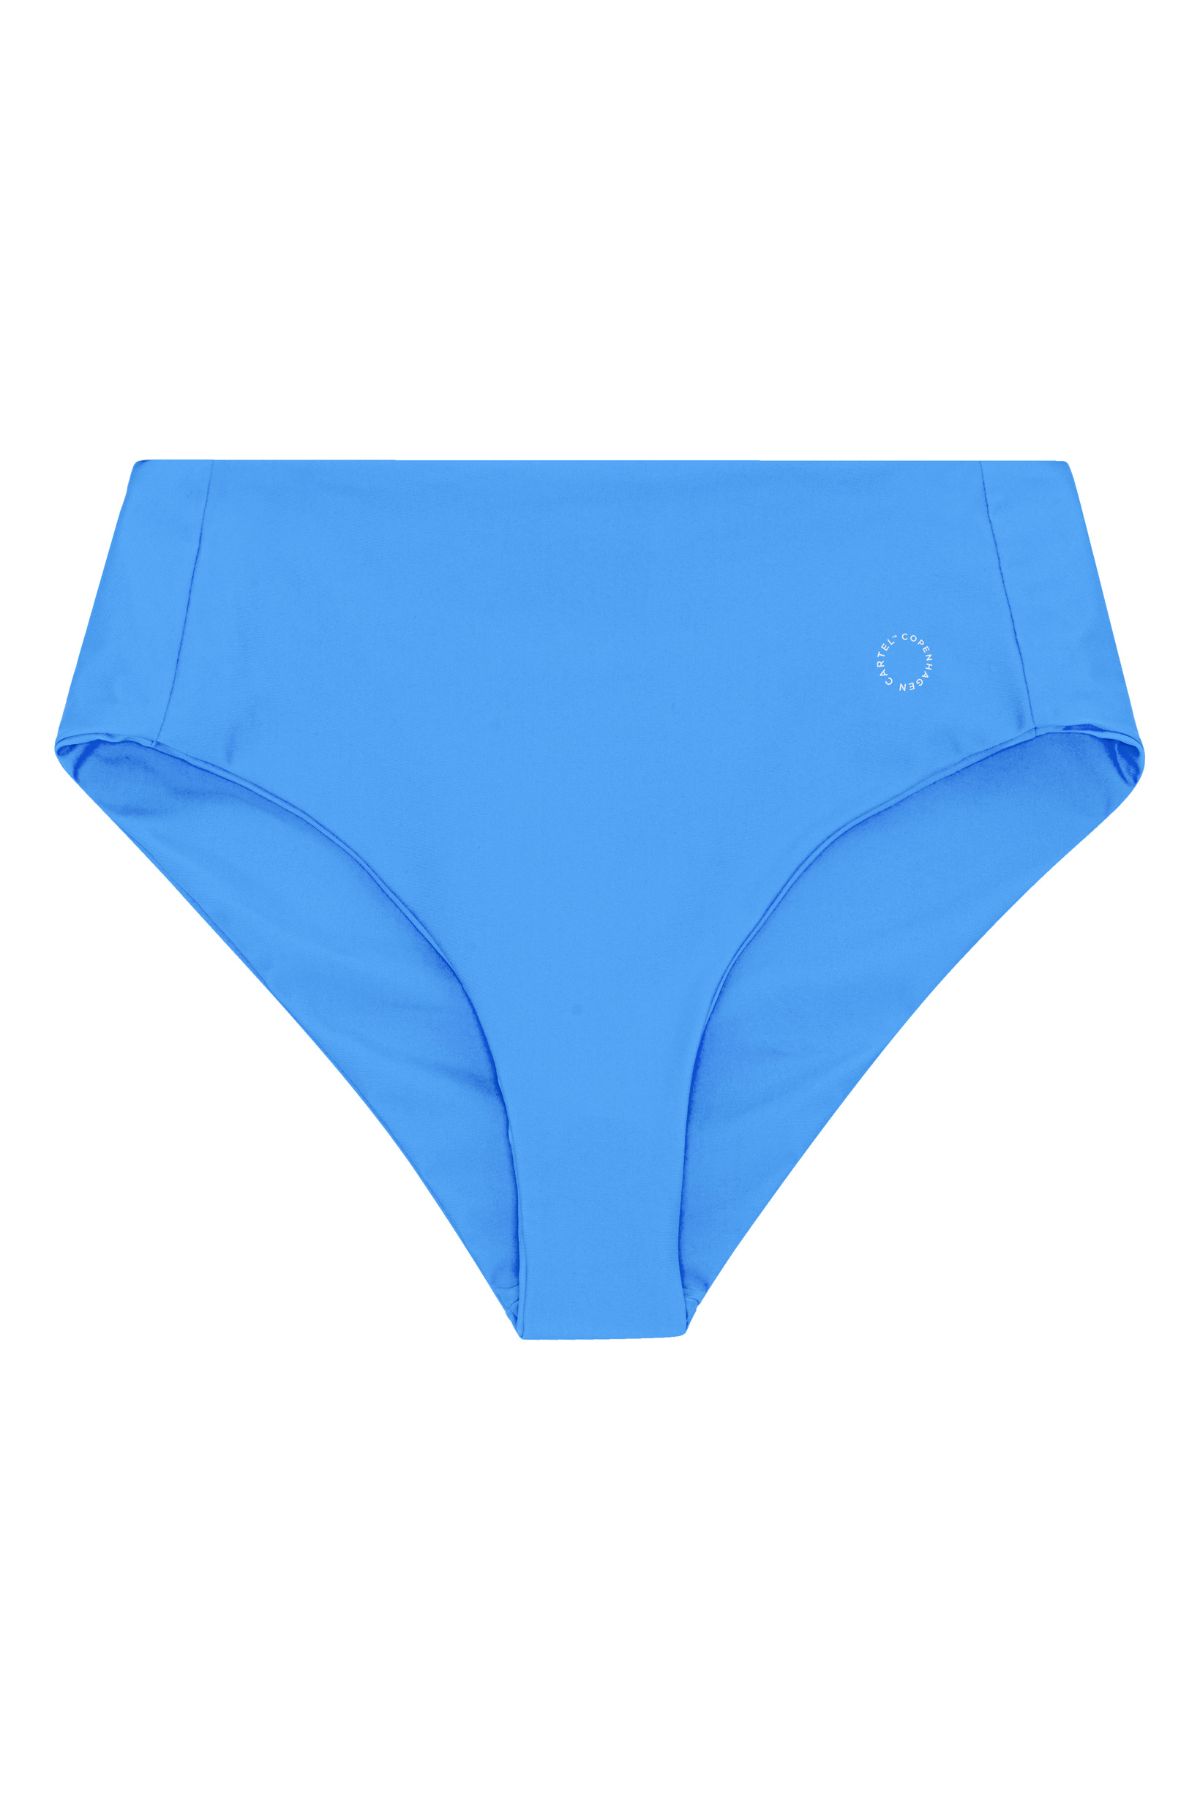 Ubud high-waist bikini bottom - Sea